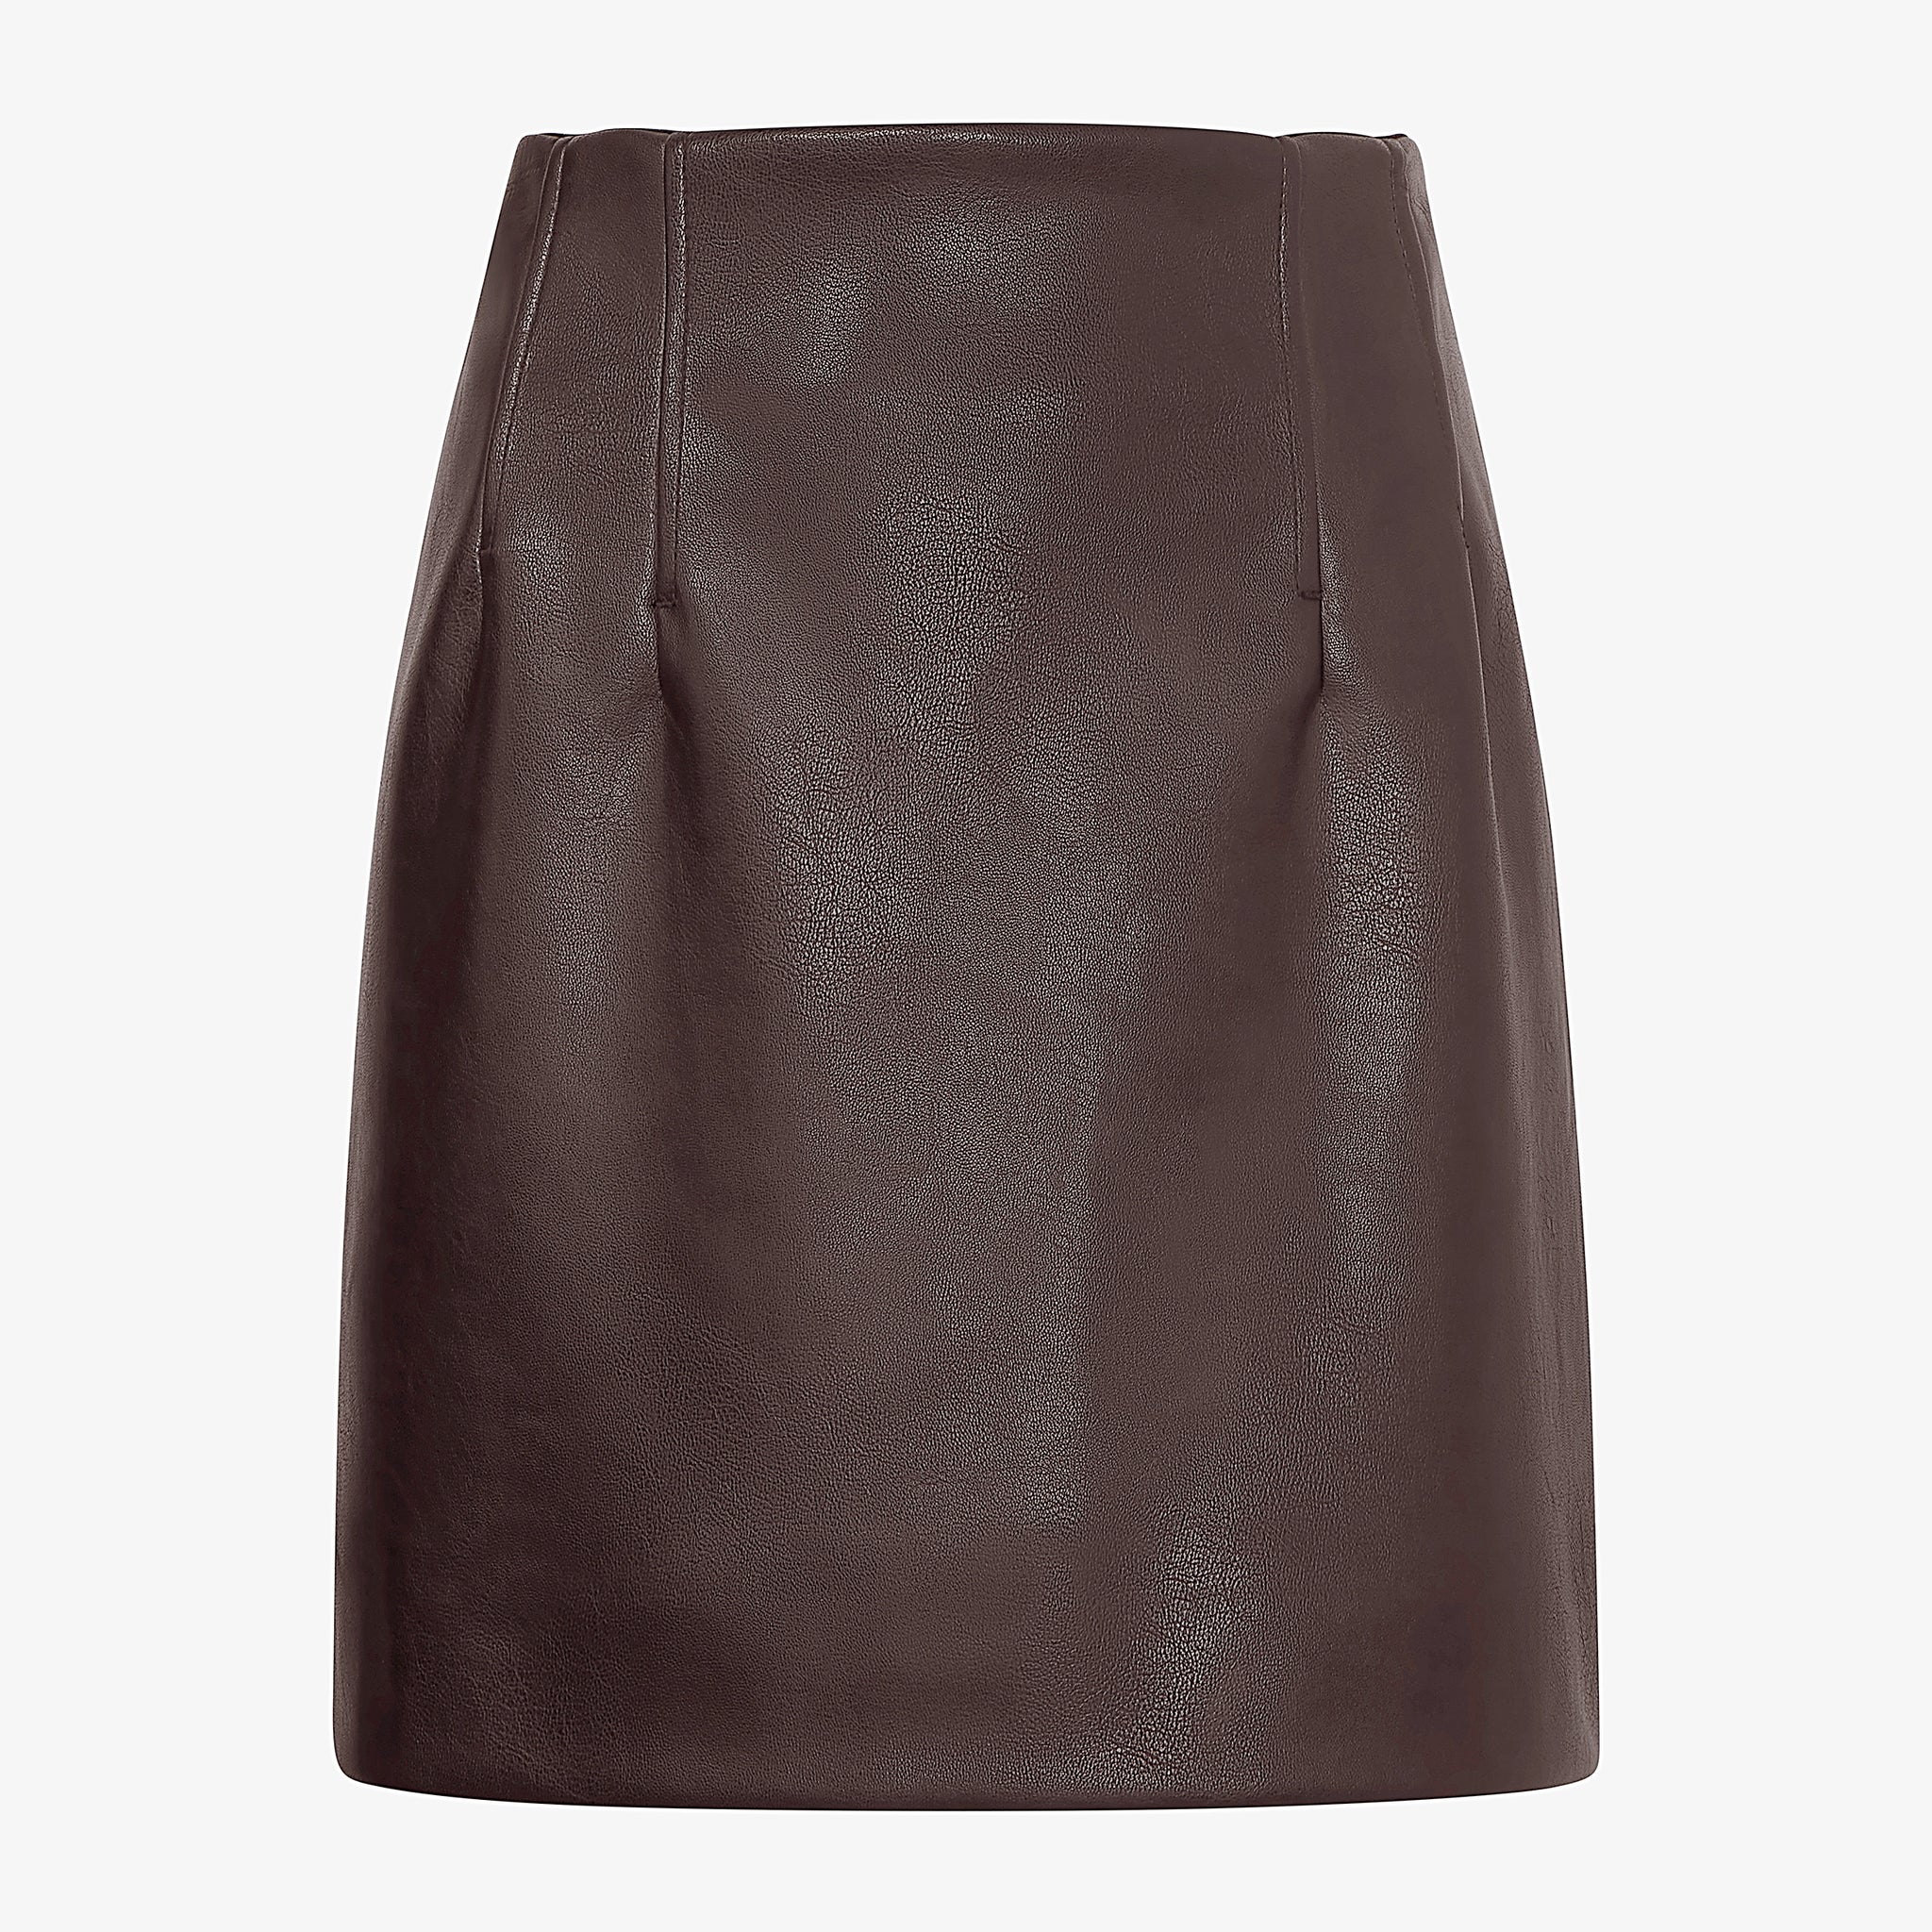 Packshot image of the Whitney Skirt in Brown